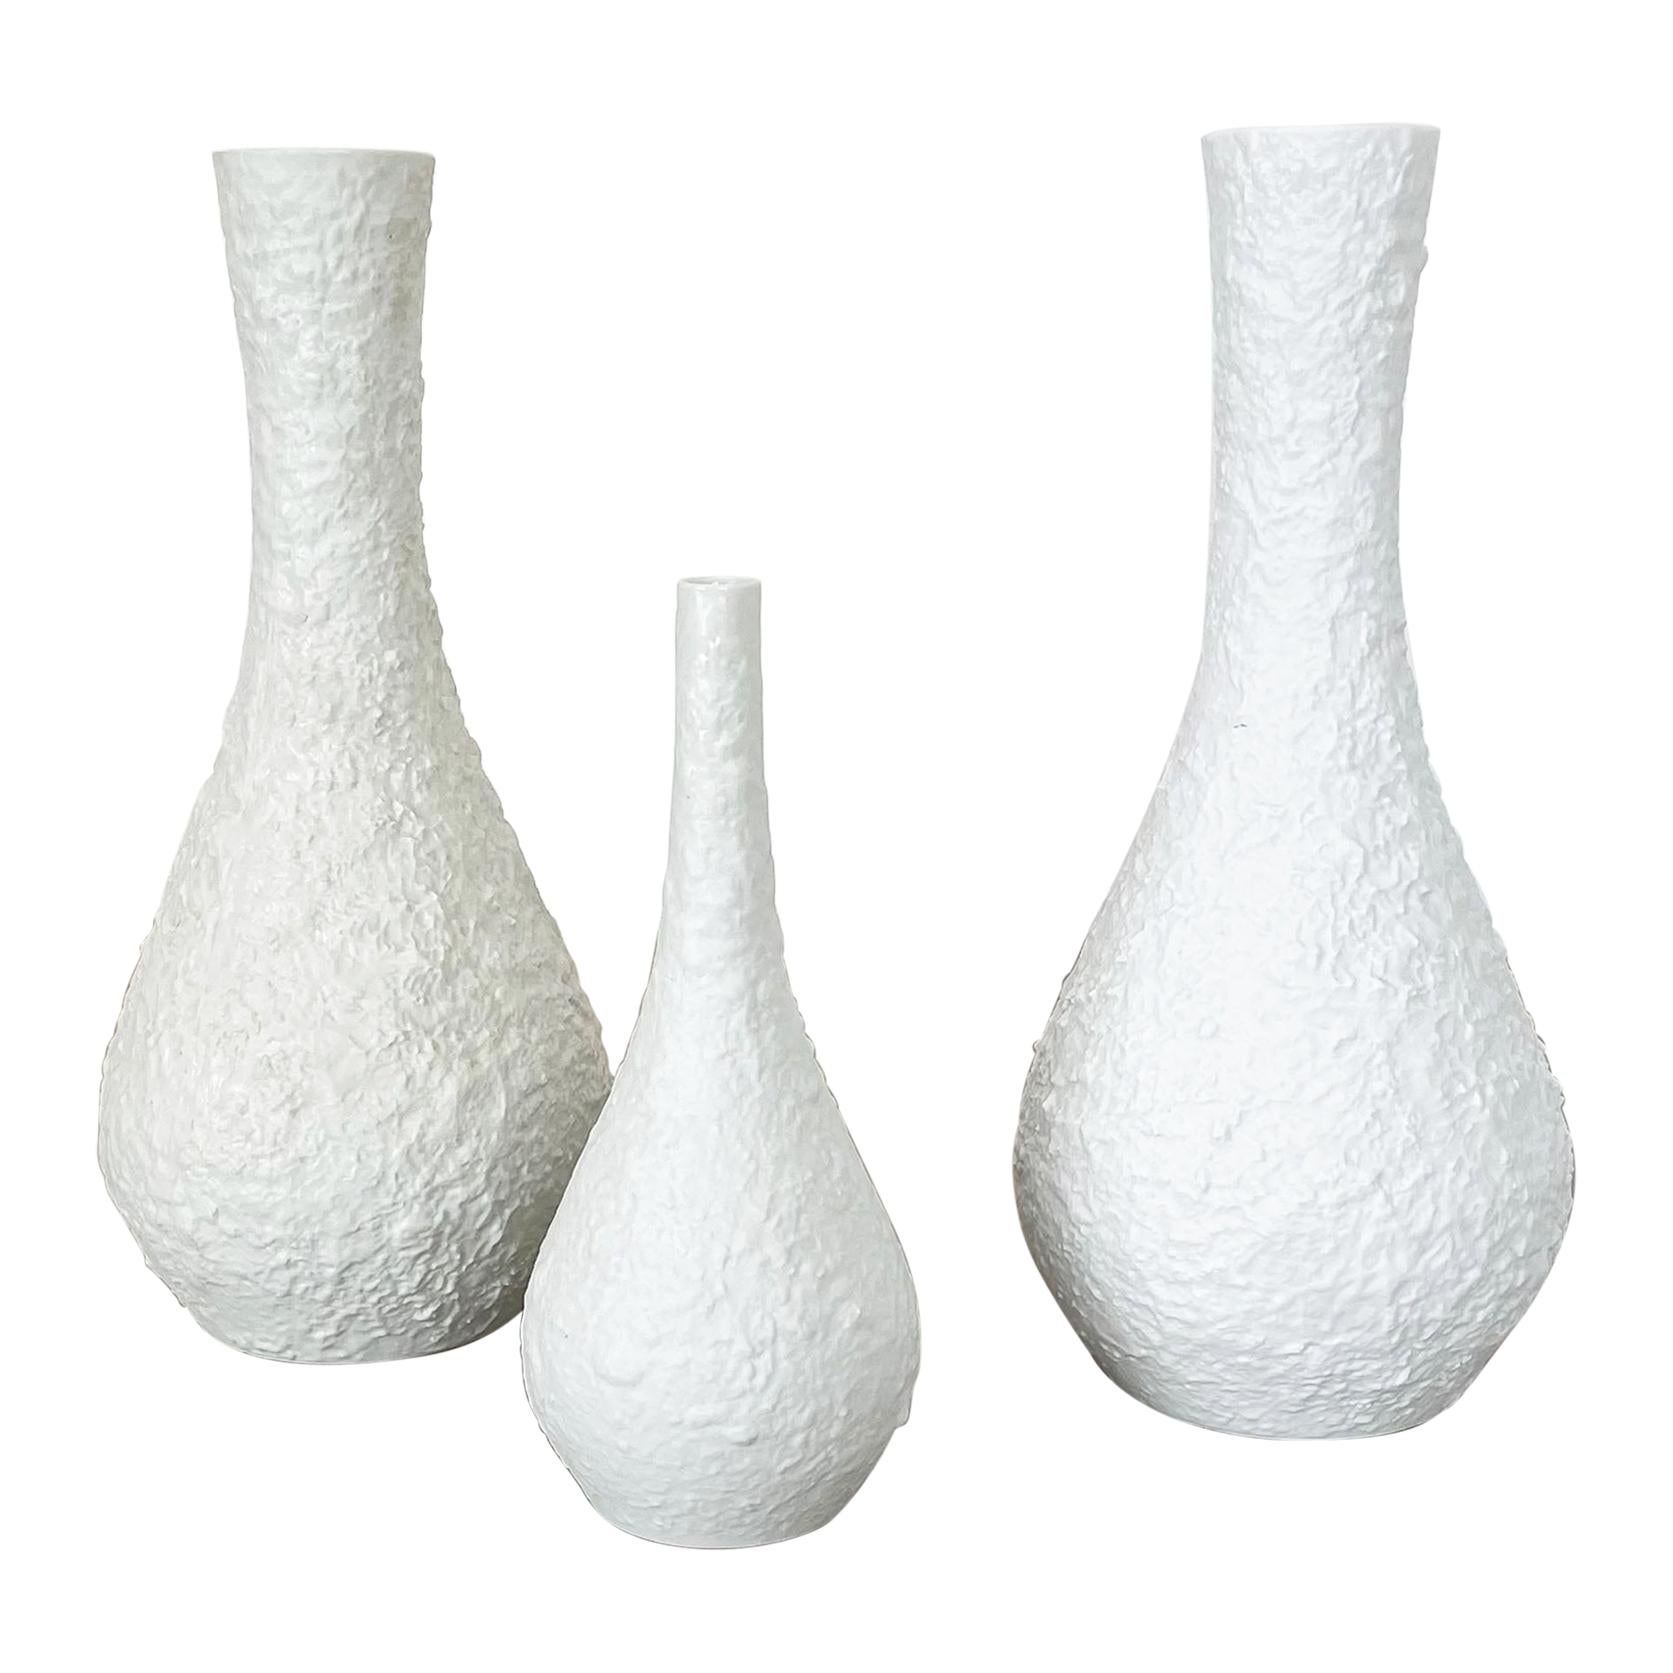 Set of 3 OP Art Biscuit Porcelain Vases by Edelstein Bavaria, Germany, 1970s